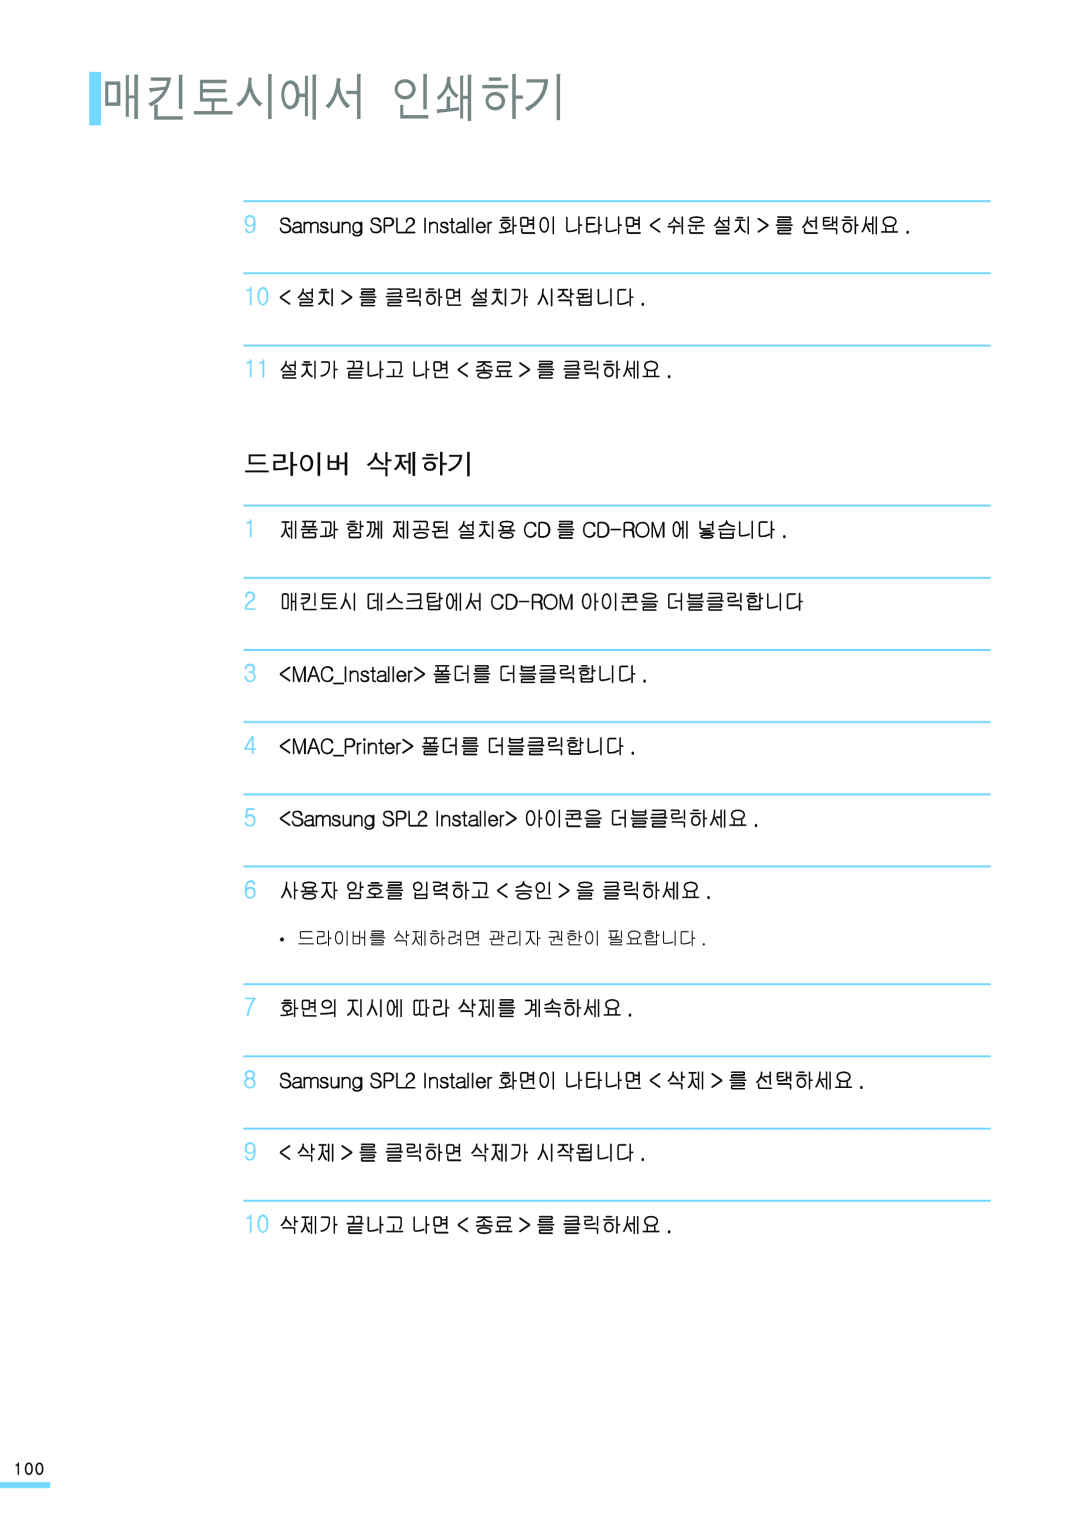 Samsung ML-2571N manual 매킨토시에서 인쇄하기, 드라이버 삭제하기, Samsung SPL2 Installer 화면이 나타나면 쉬운 설치 를 선택하세요 